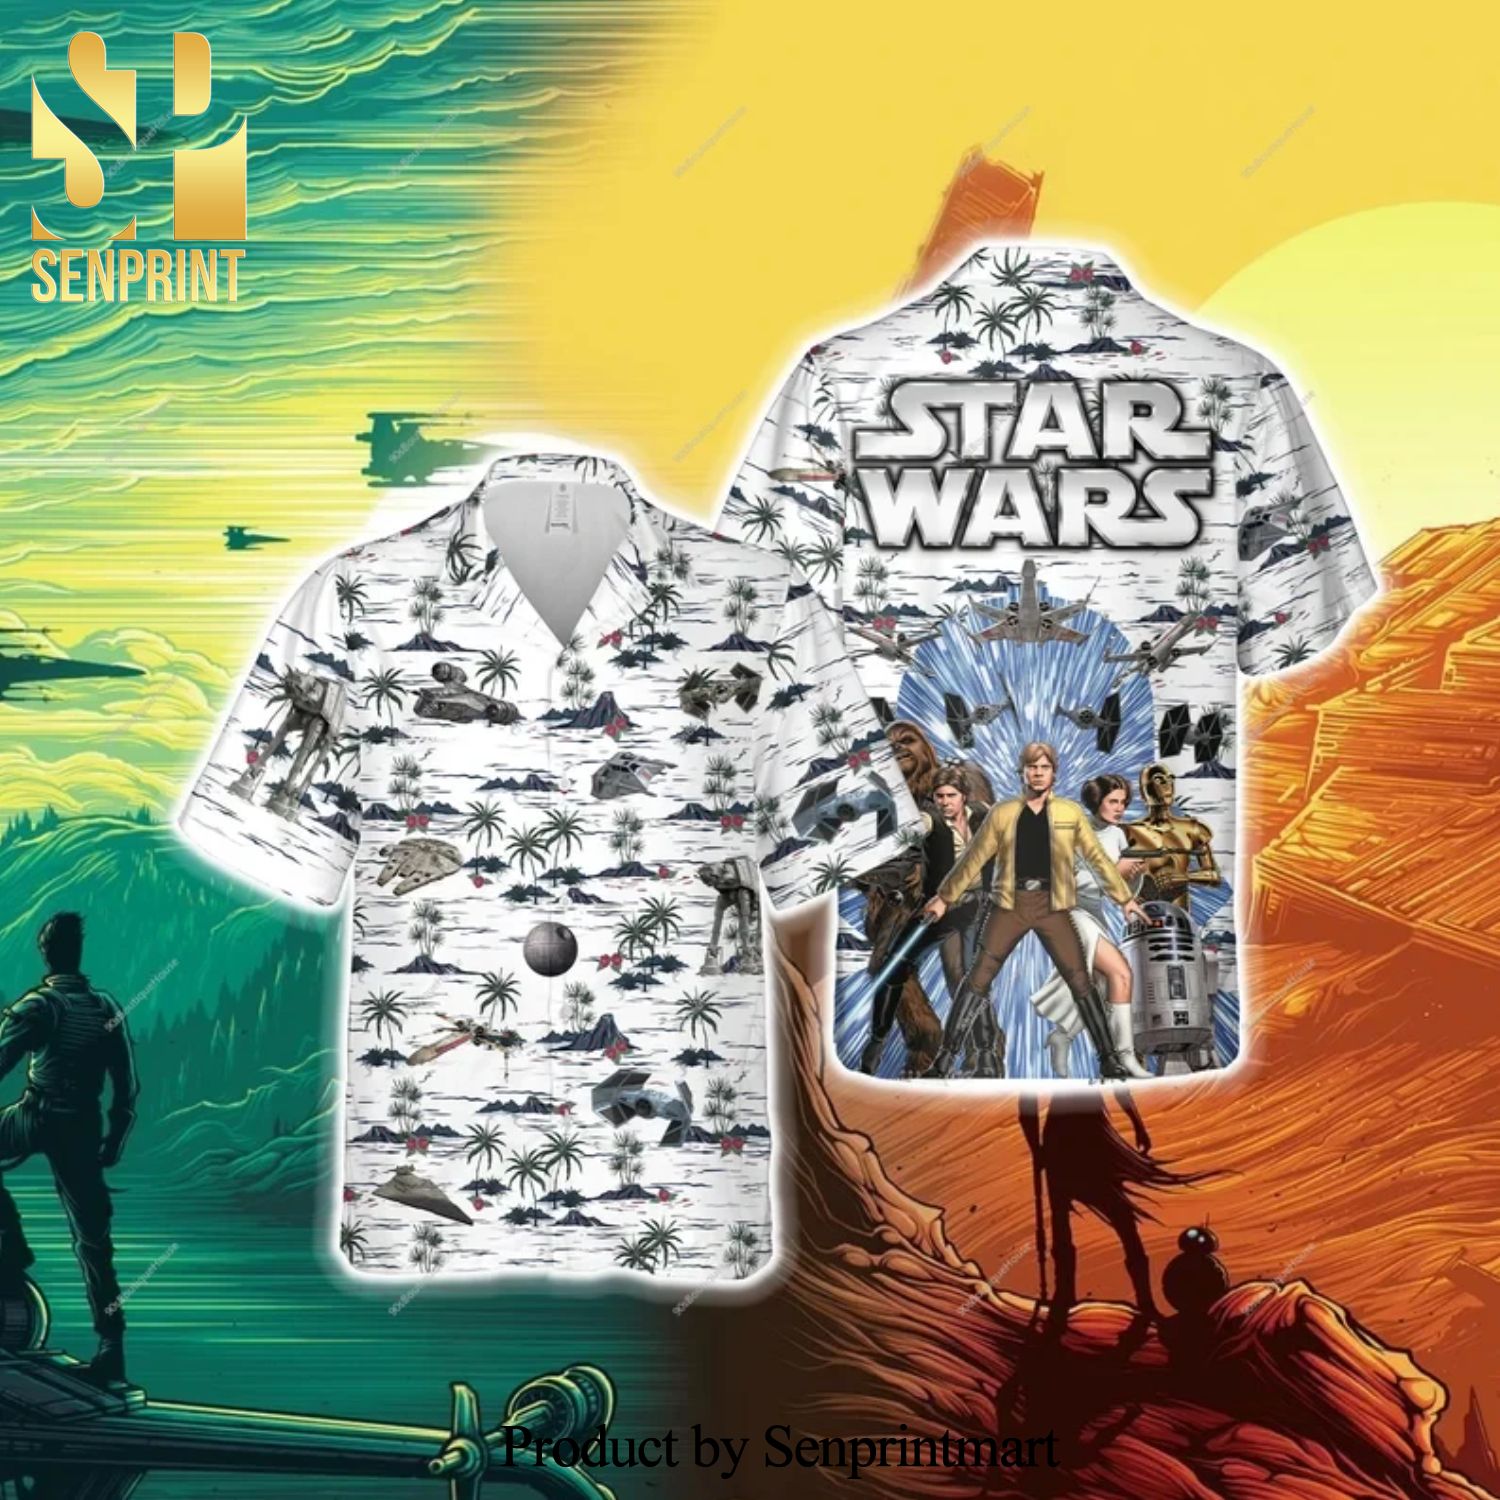 Luke Skywalker Princess Leia Han Solo Chewbacca R2-D2 C-3PO Star Wars Full Printing Hawaiian Shirt - White